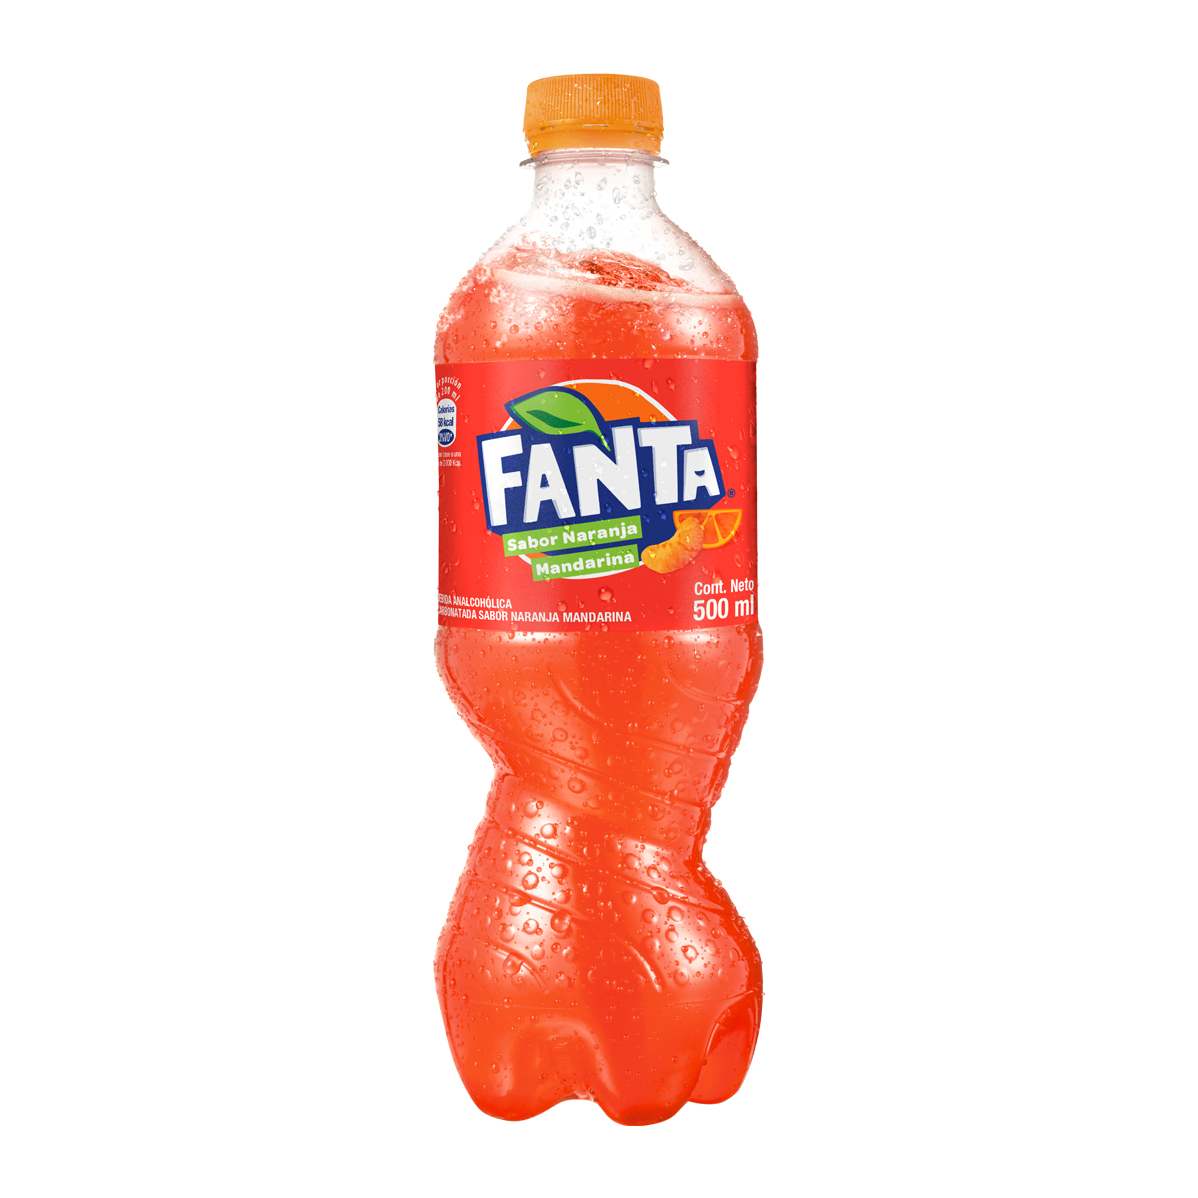 Botella de Fanta Mandarina